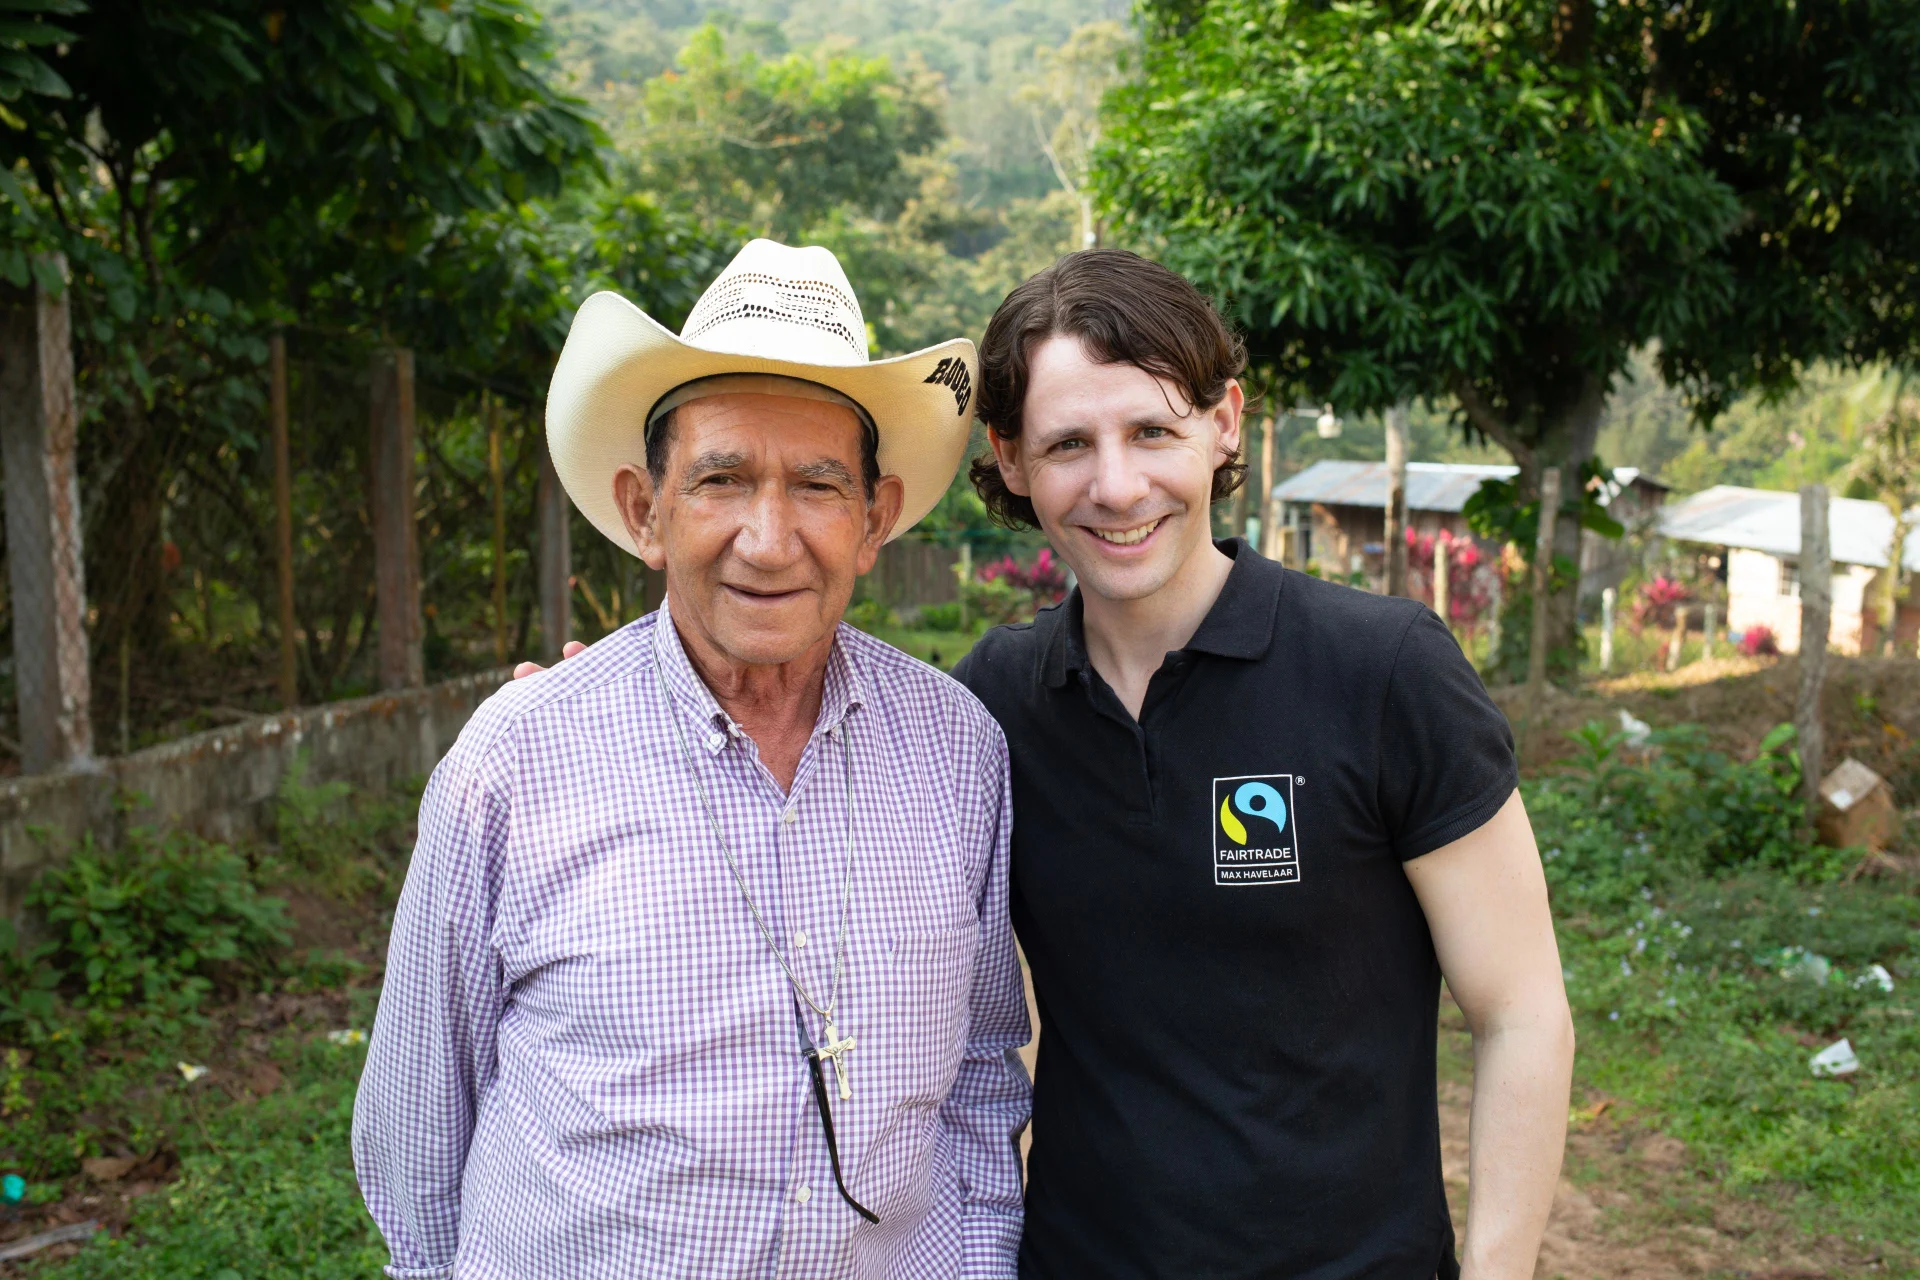 A picture of a Latin American farmer next to a Fairtrade employee.